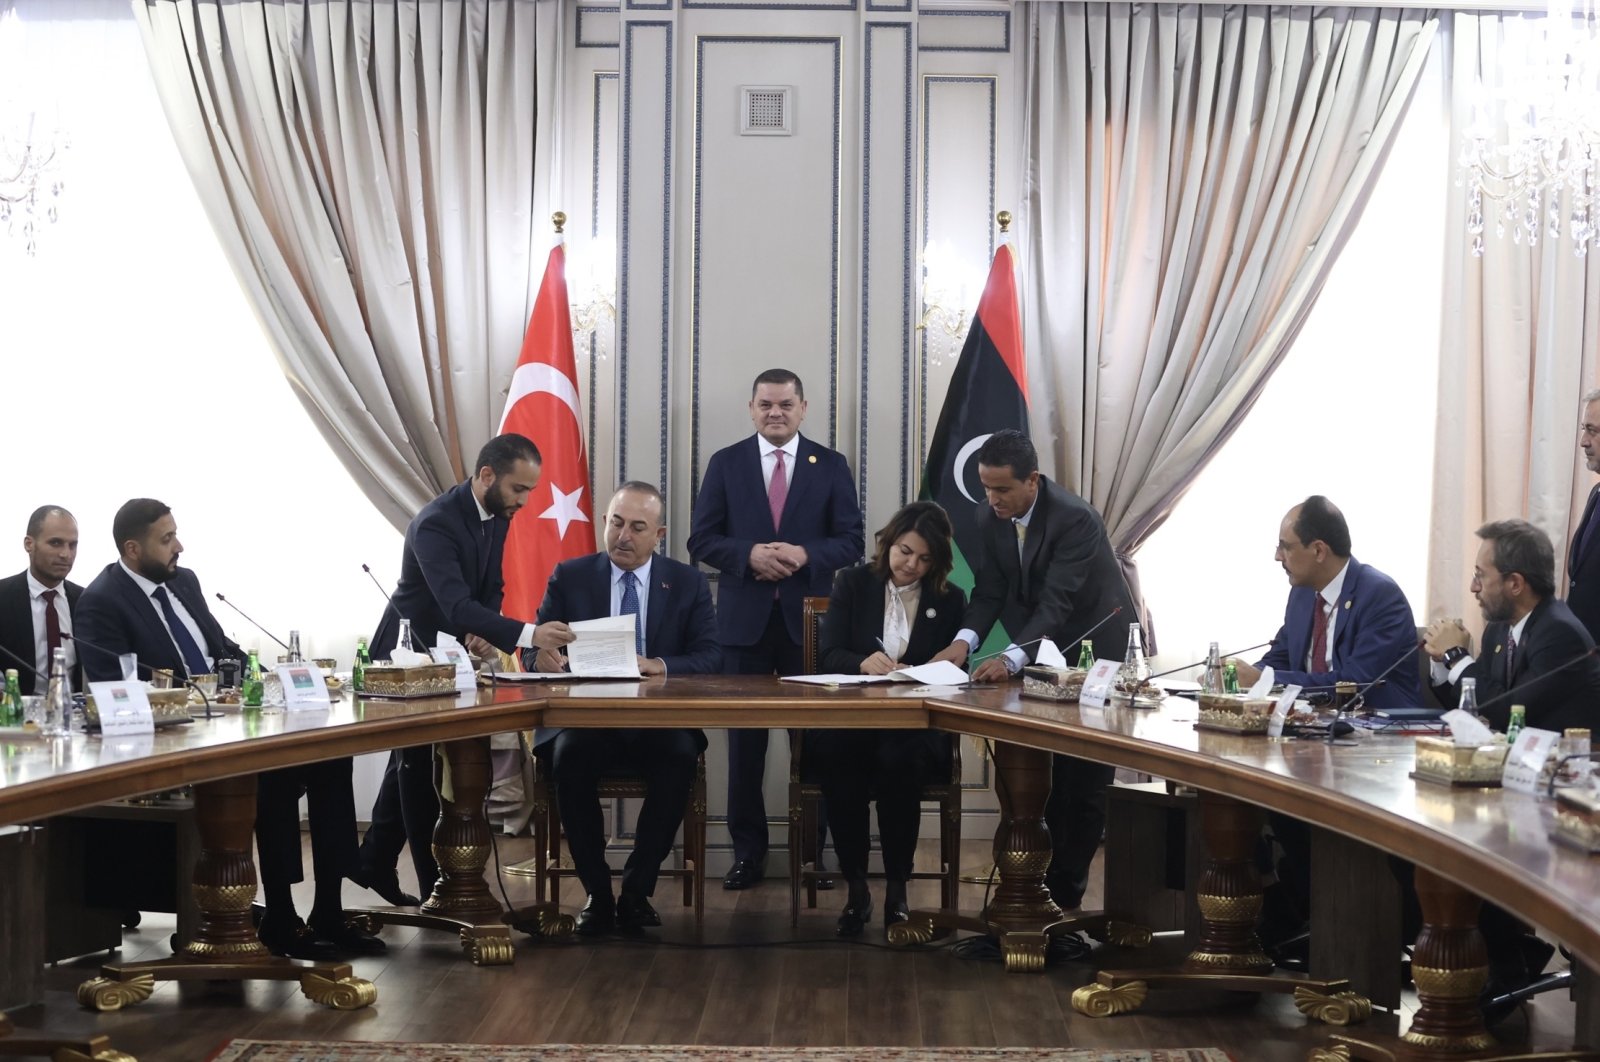 Türkiye, Libya ink deals on maritime energy explorations